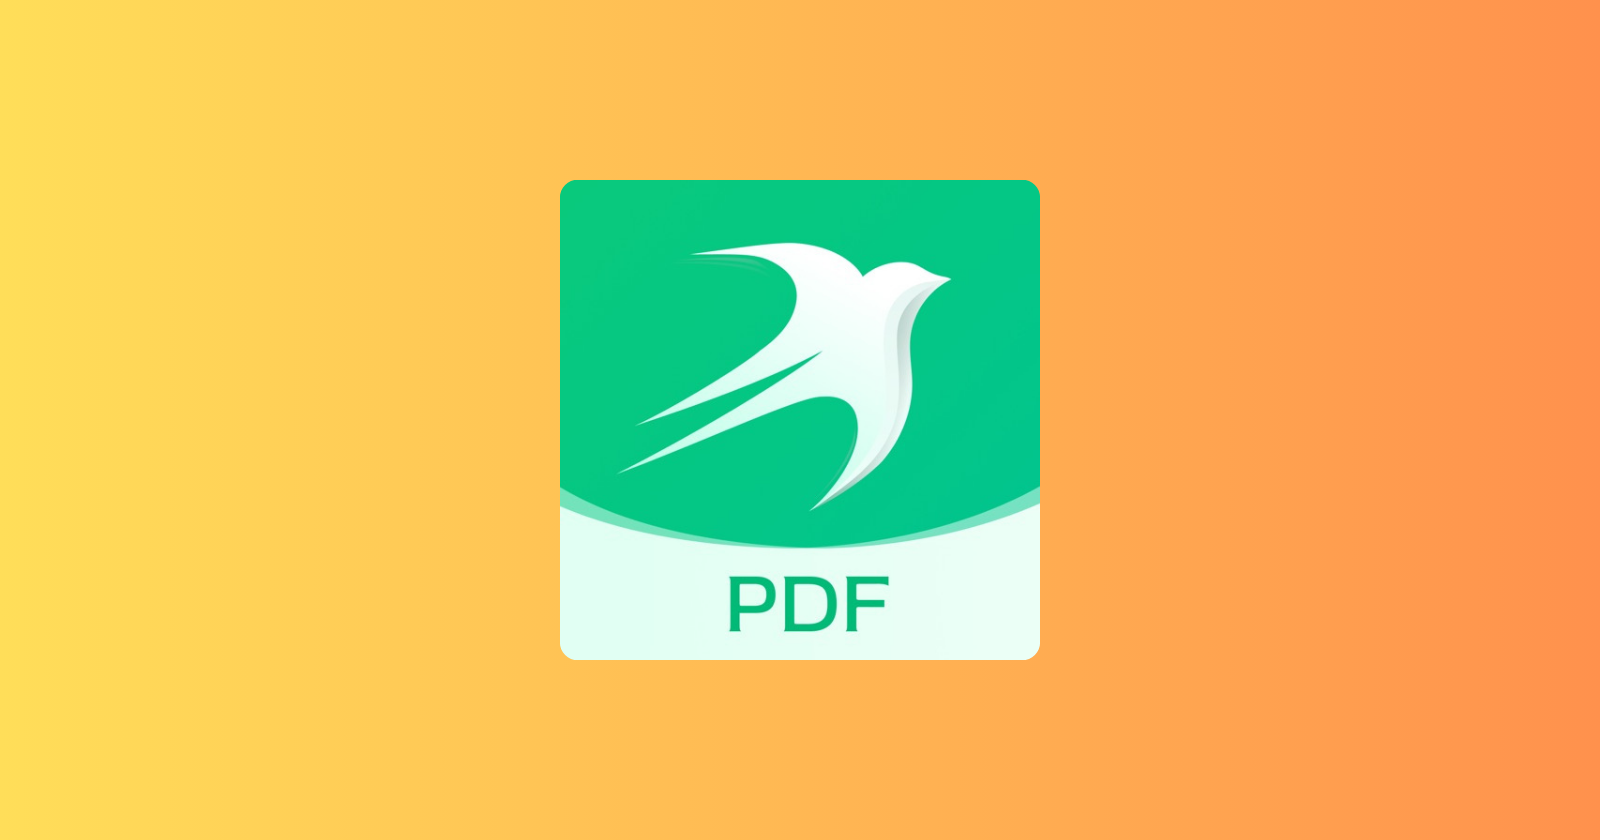 Is SwifDoo PDF the ultimate iOS PDF app? Let's explore